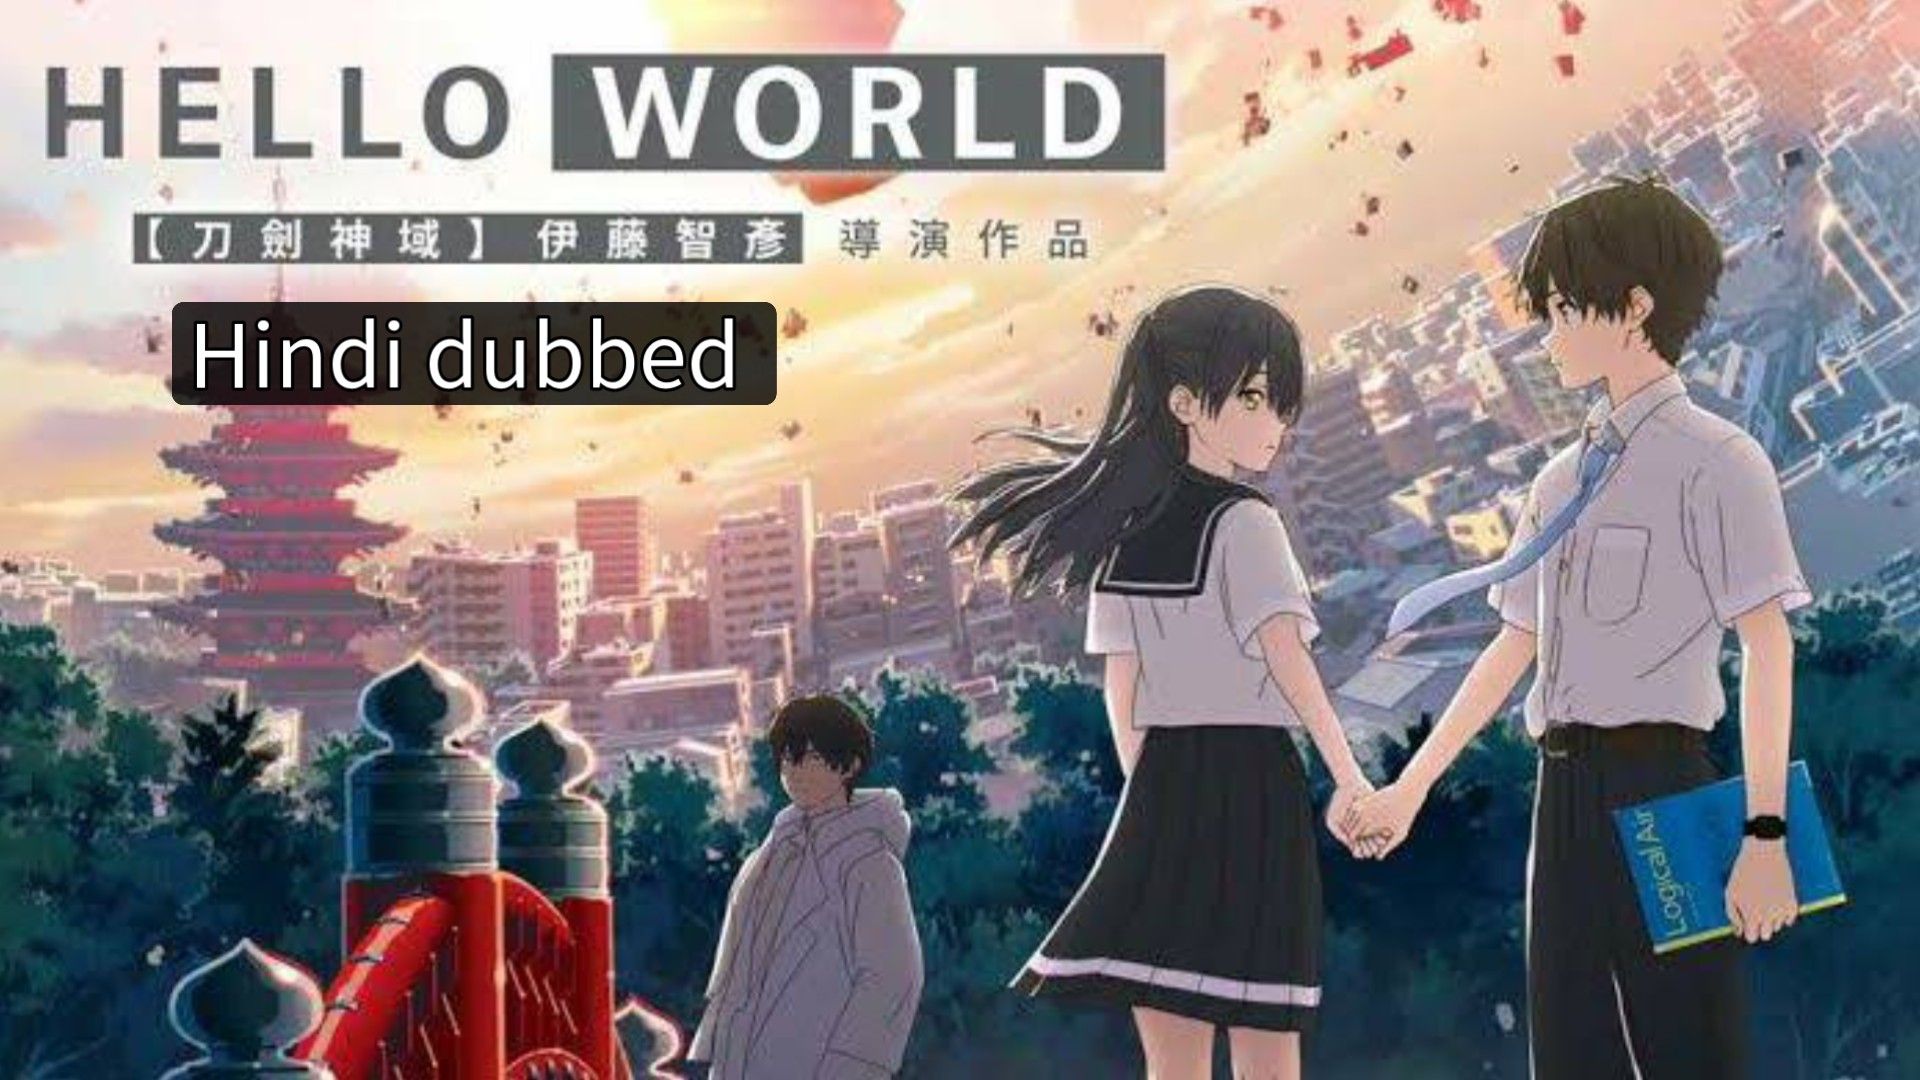 Hello World anime film is coming to Netflix - ANIMEPH